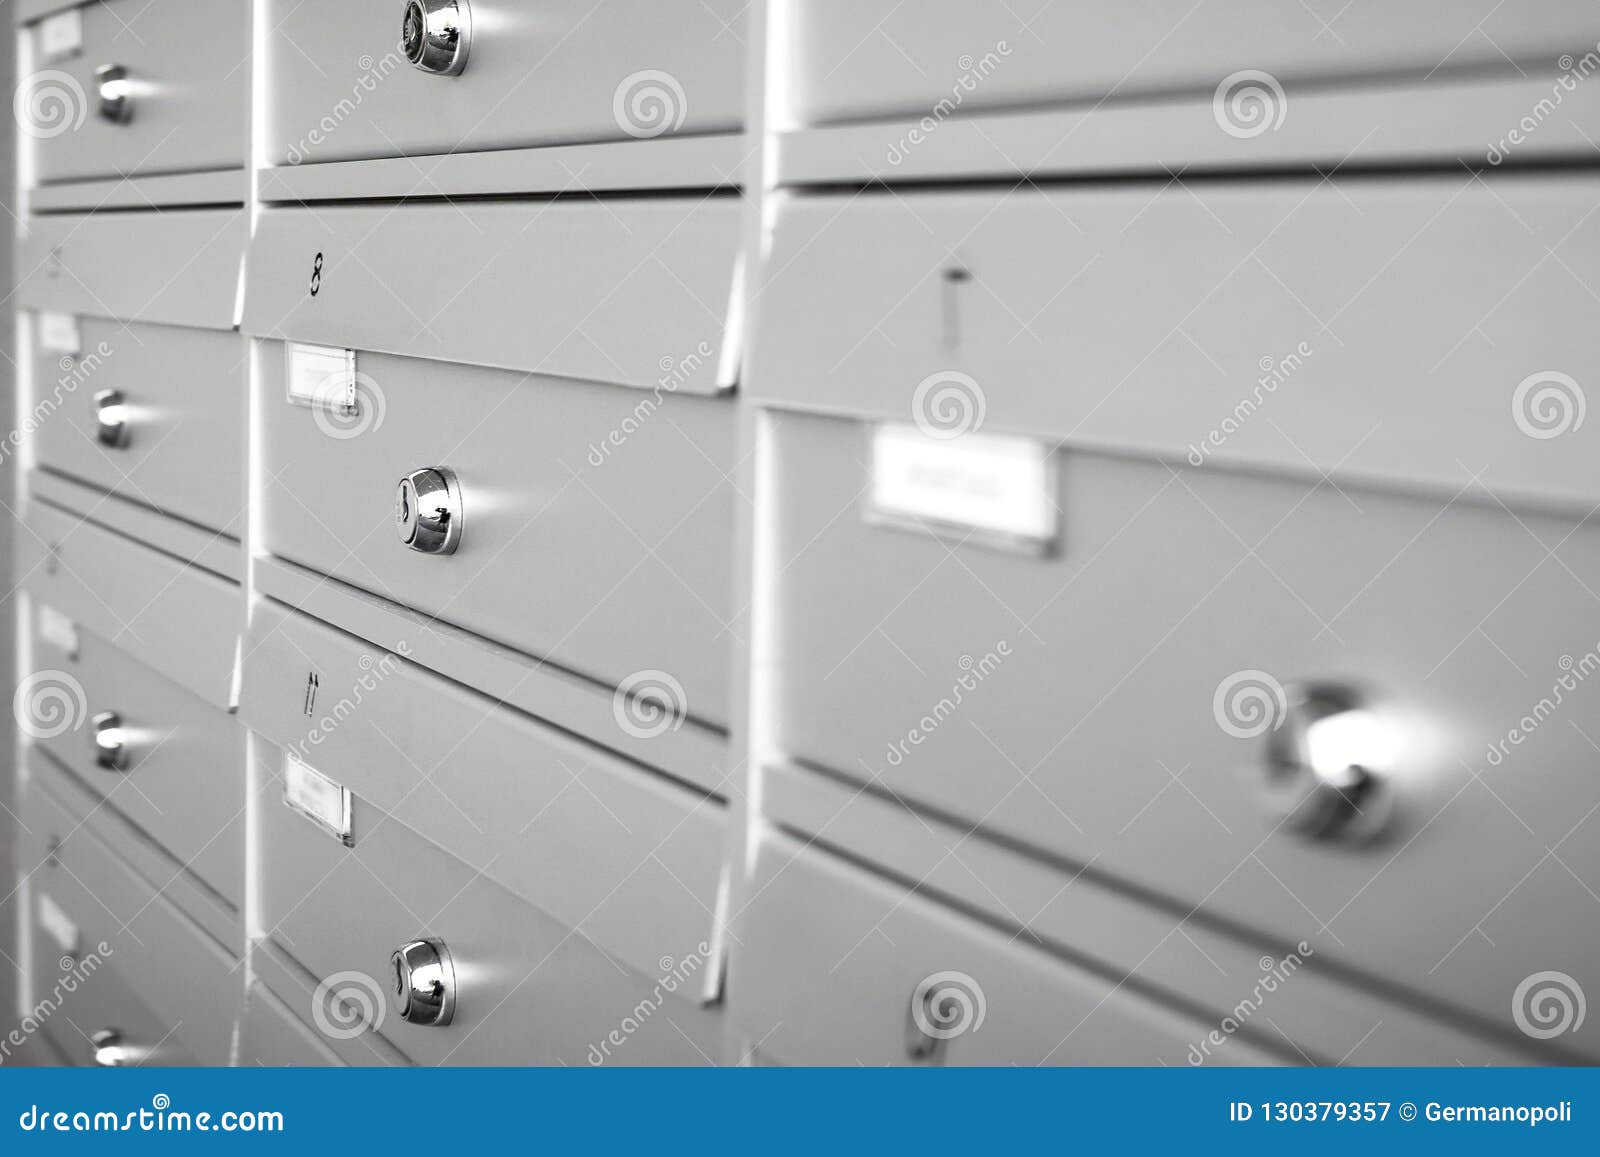 Aluminum mail boxes stock image. Image of drawer, deposit ...